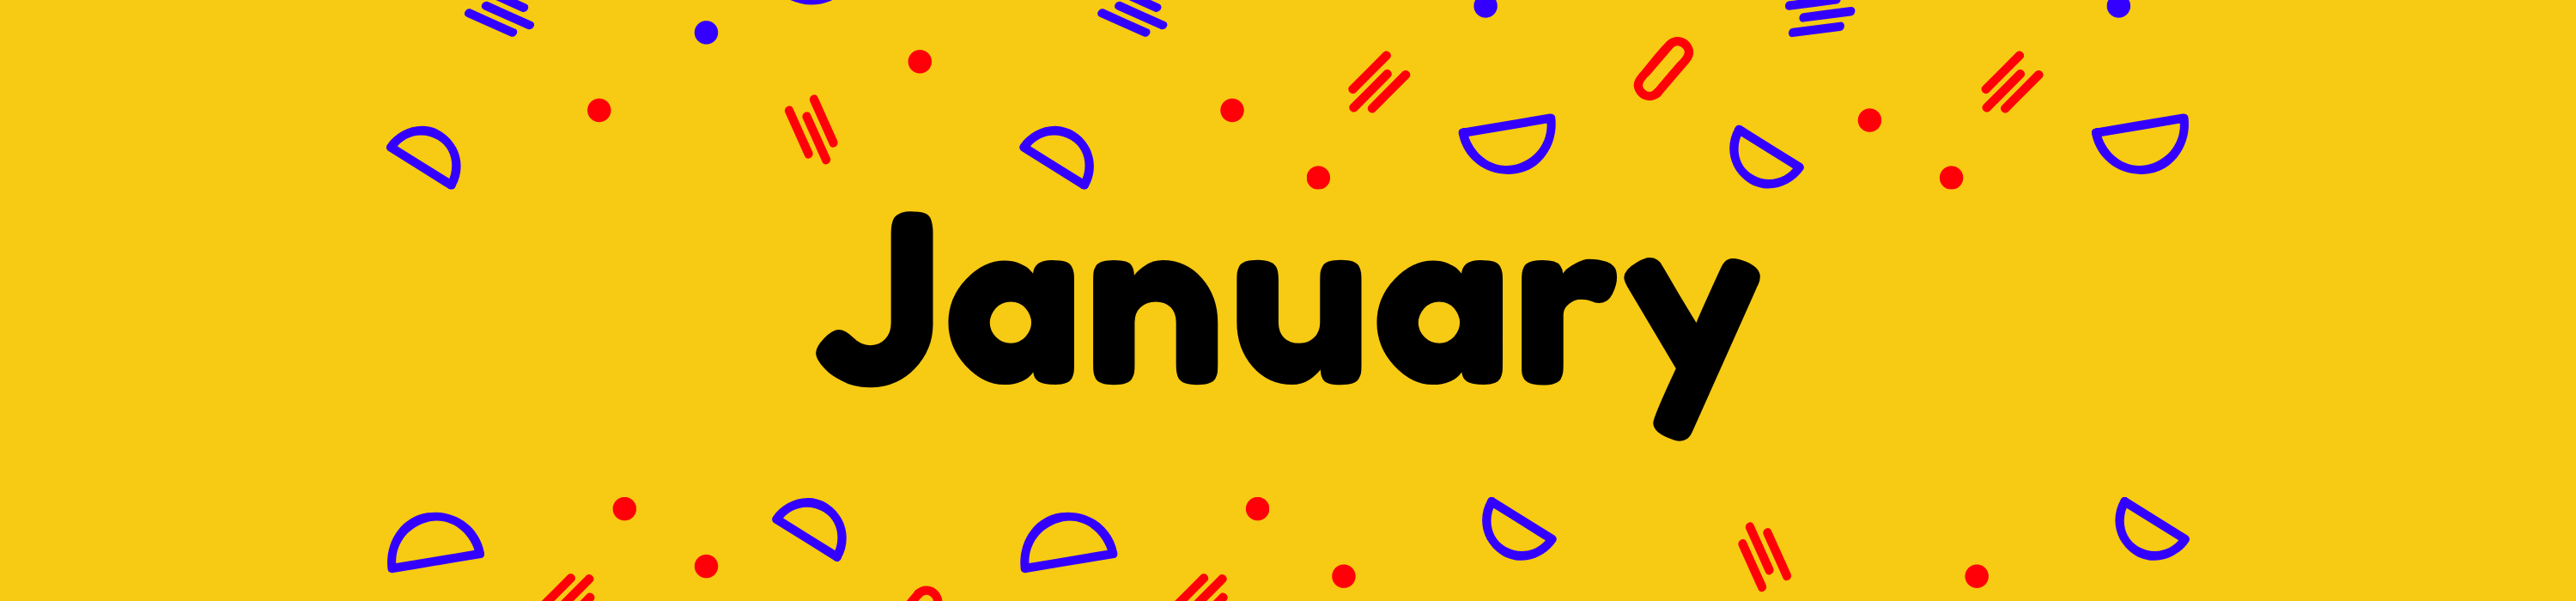 January-banner